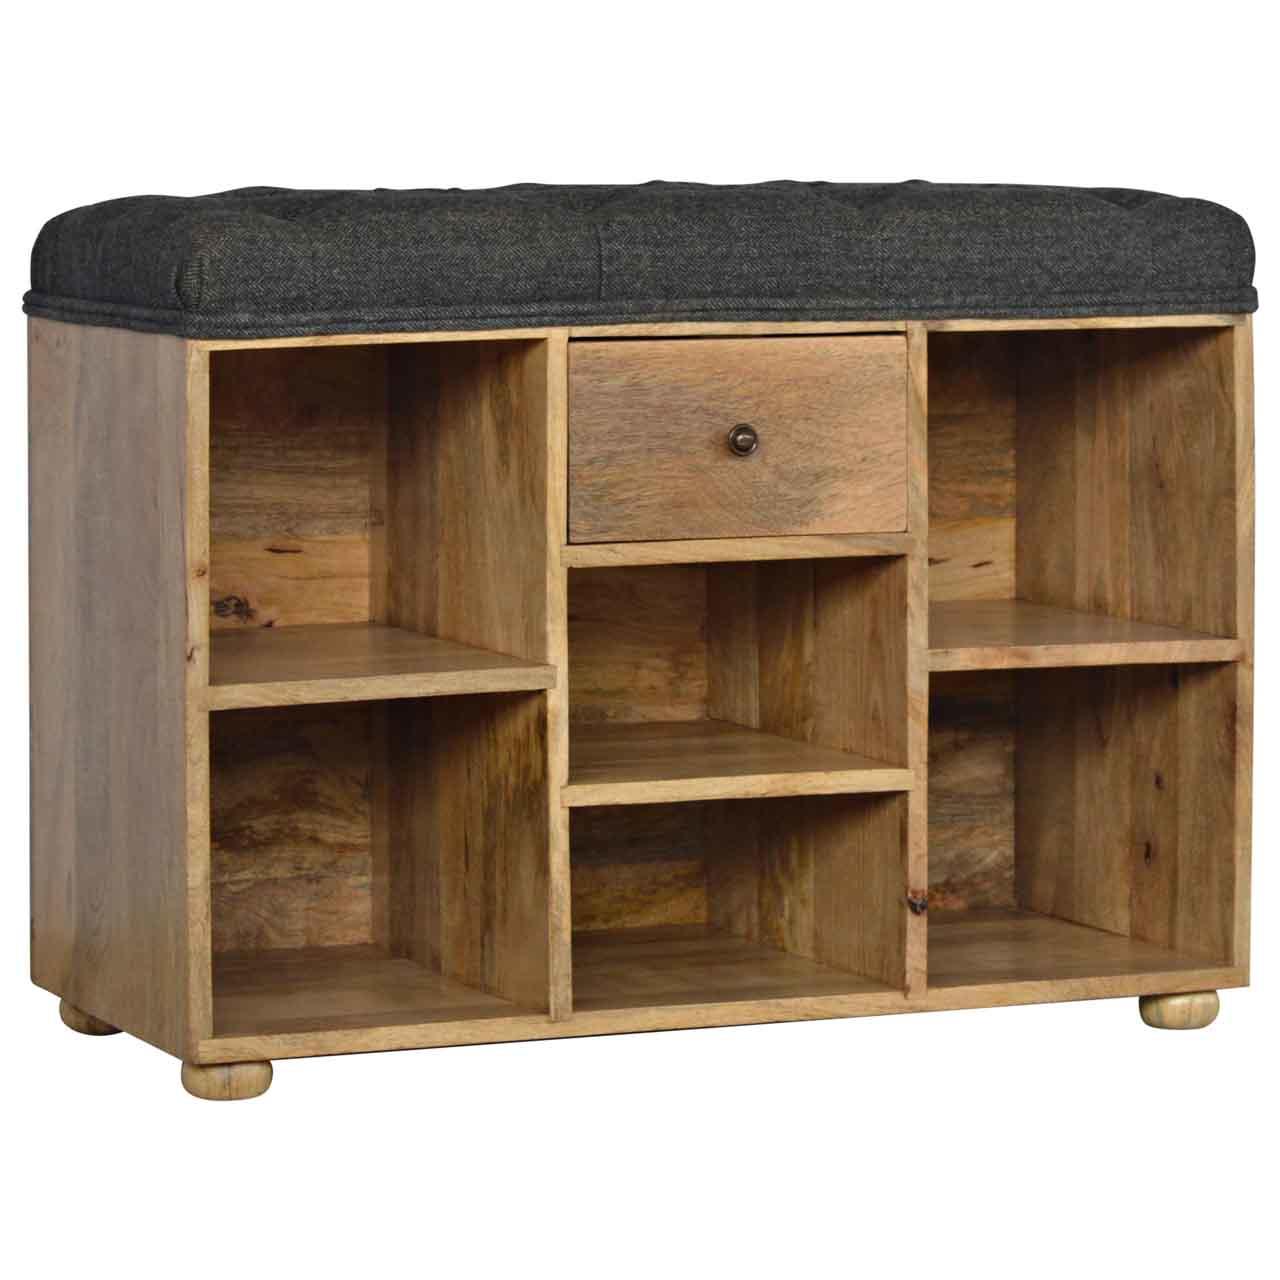 Black tweed 6 slot shoe storage bench - crimblefest furniture - image 3